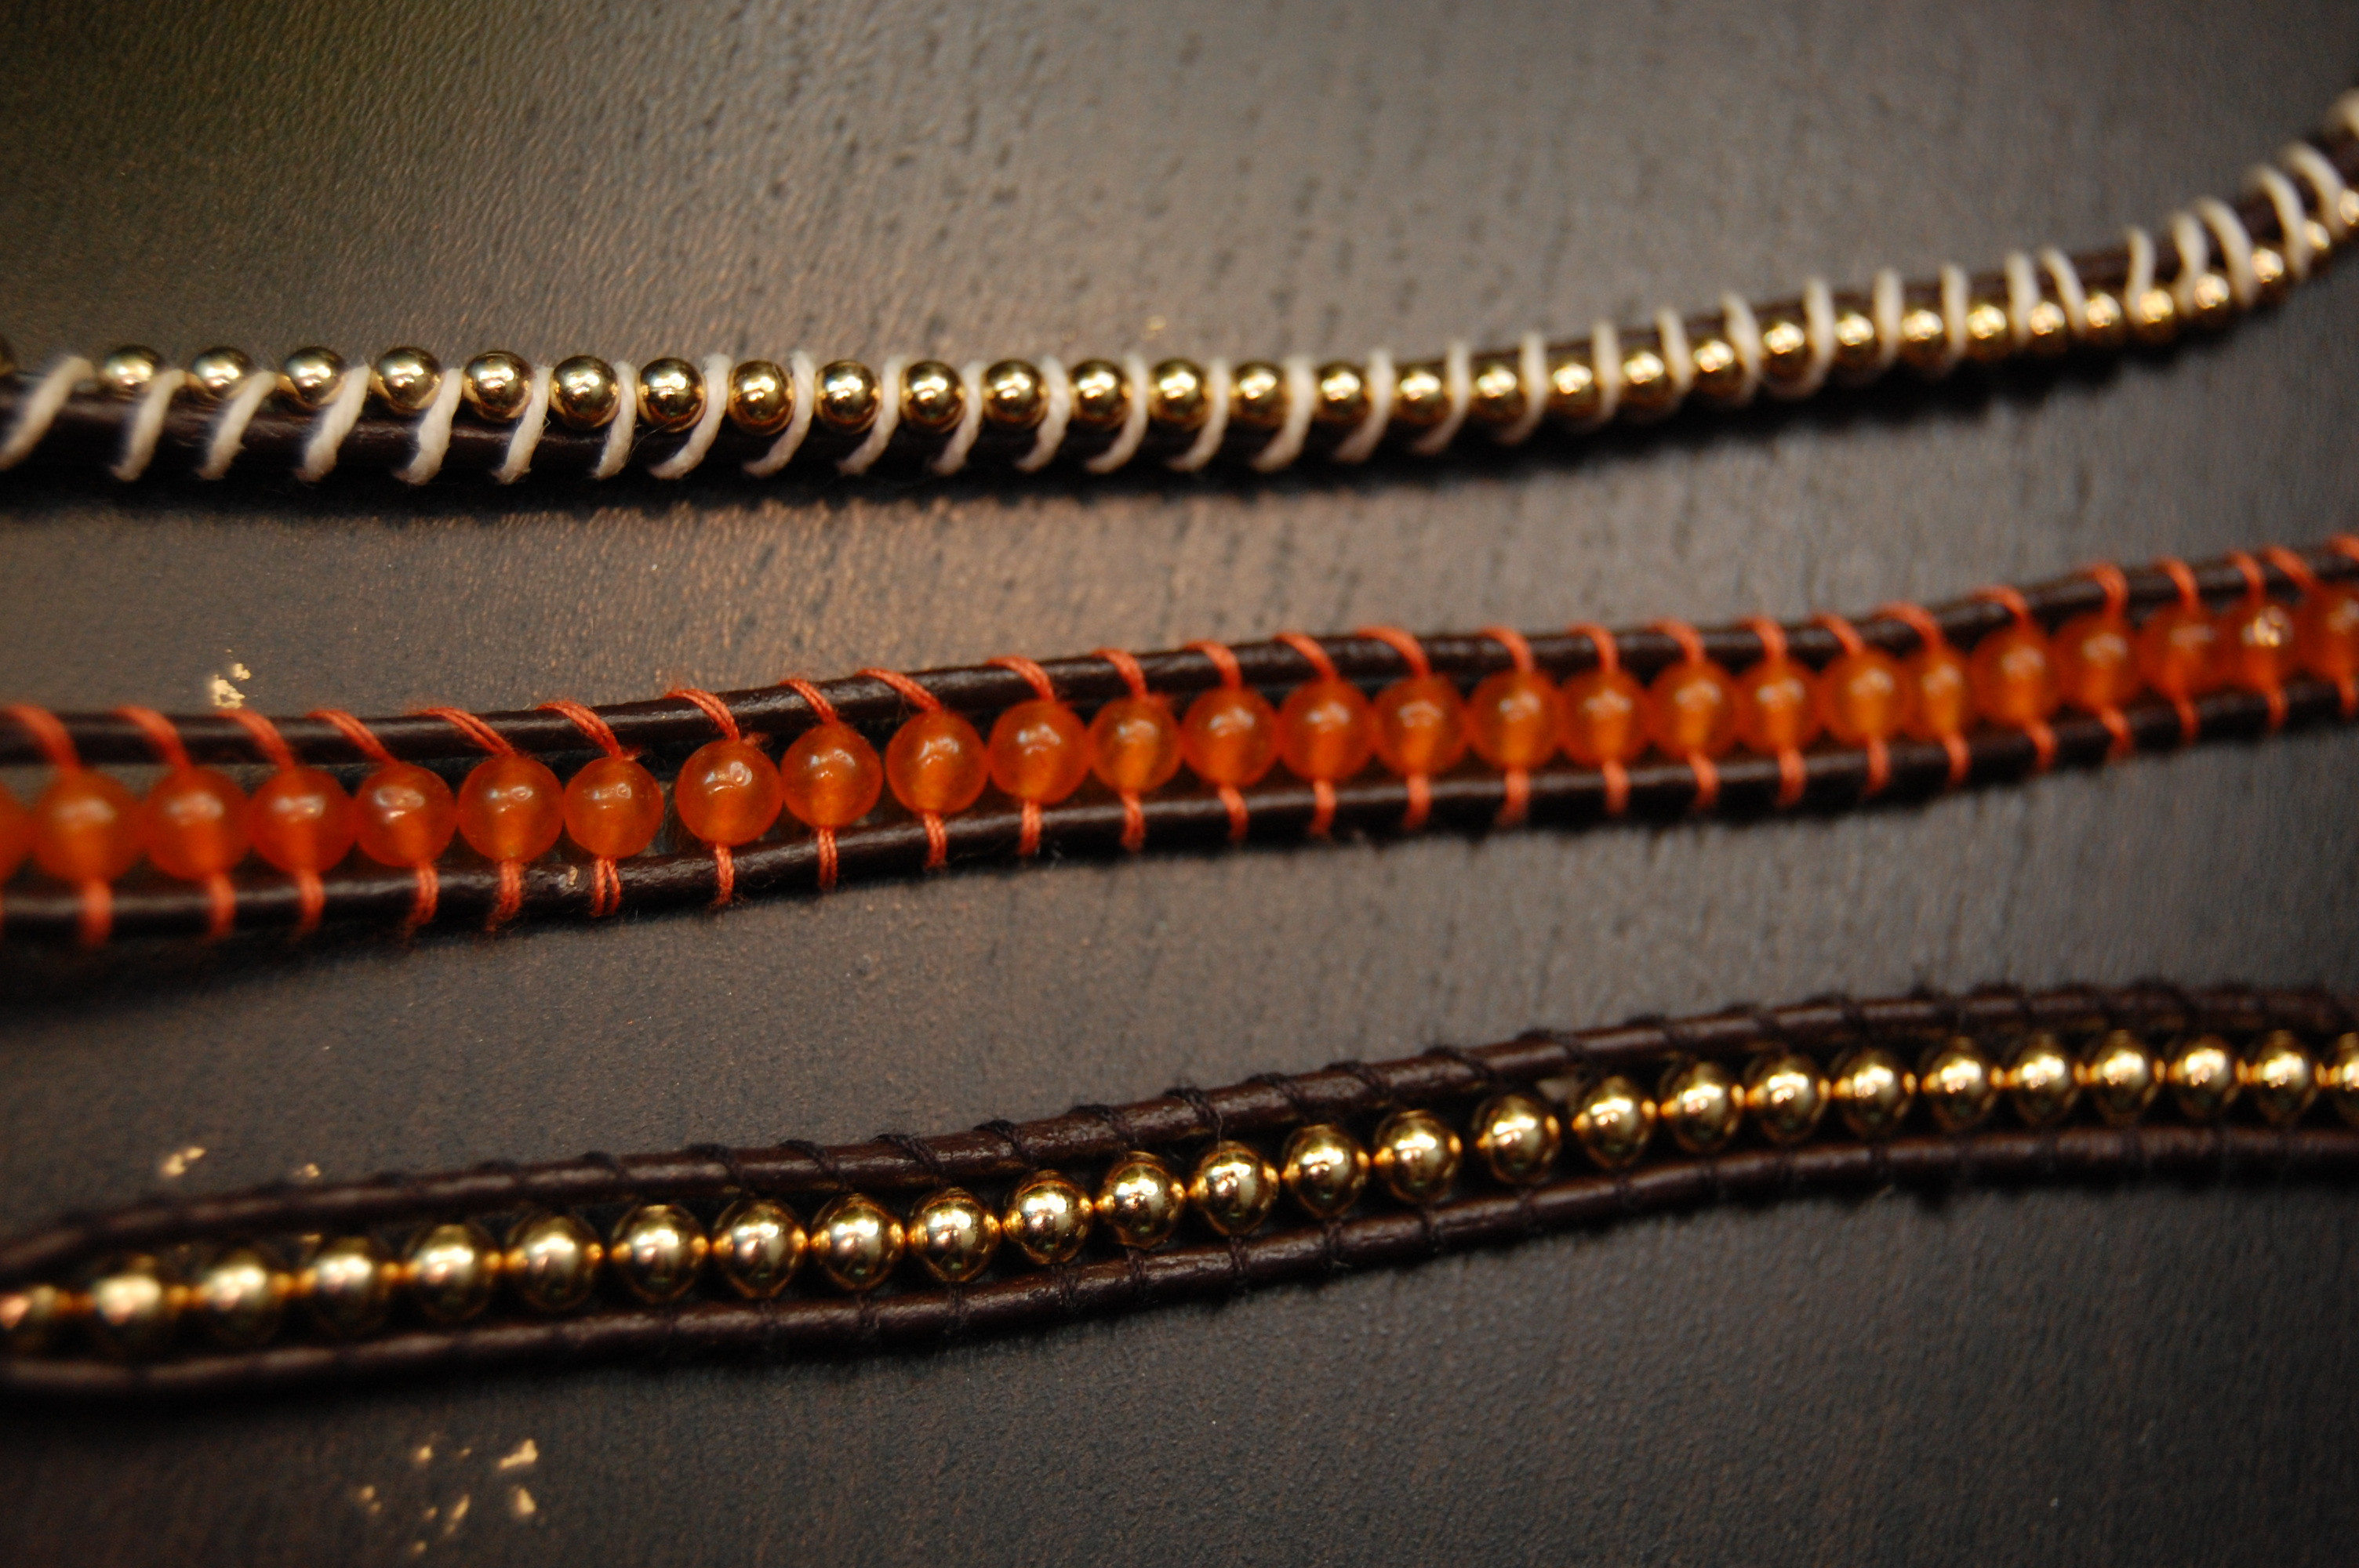 Best ideas about DIY Wrap Bracelet
. Save or Pin DIY Chan Luu Bracelet Now.